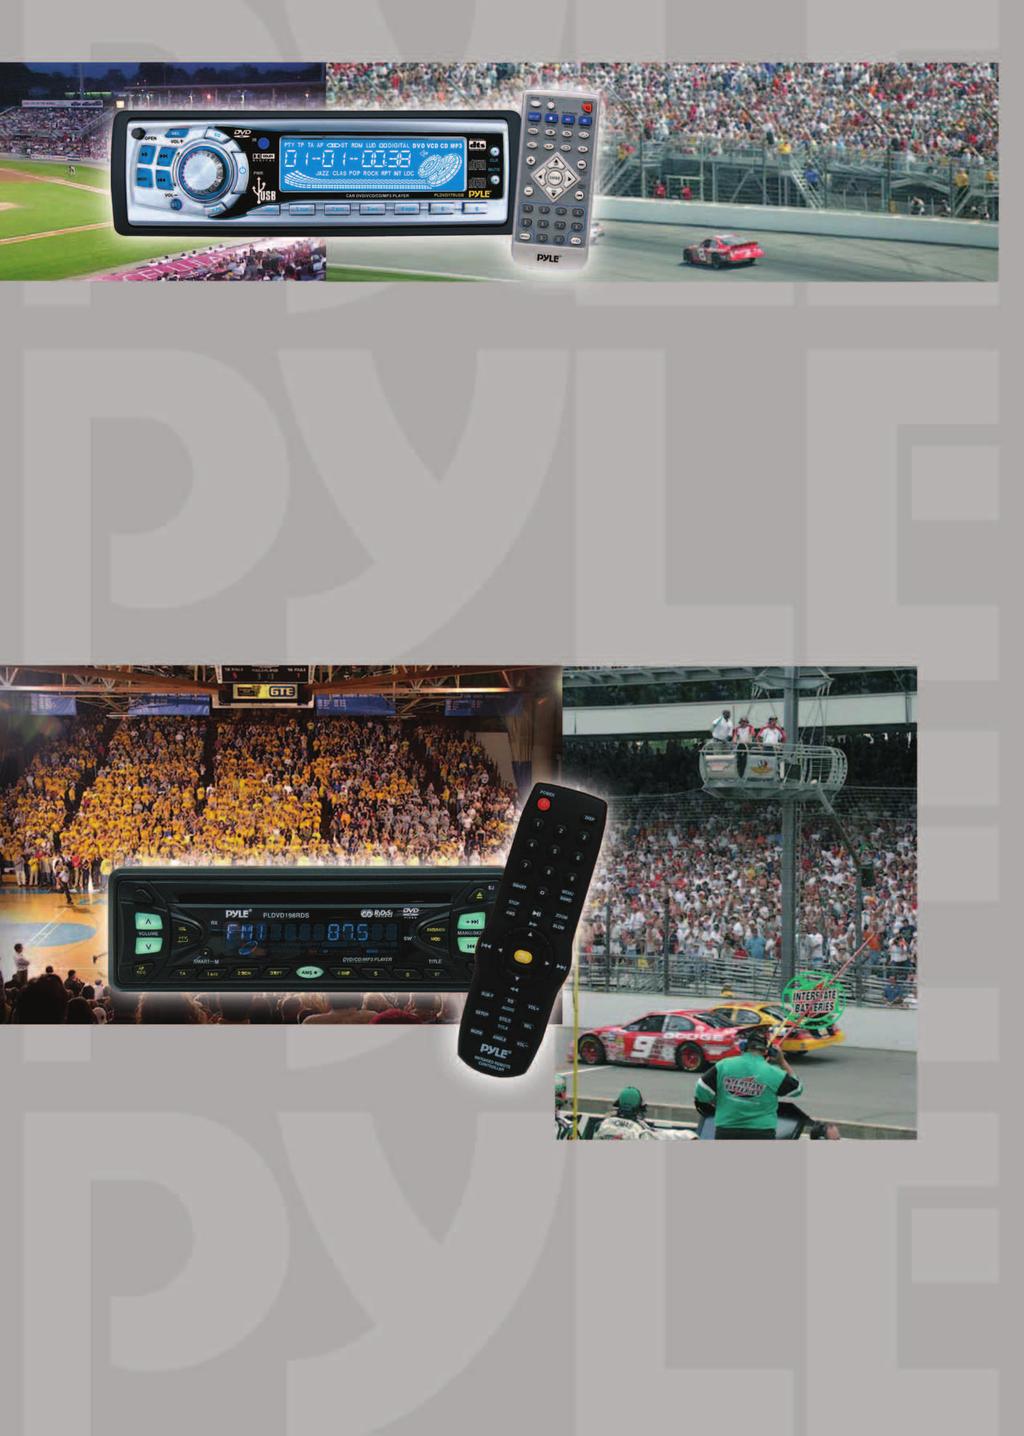 PLDVD178 USB 1 DIN DVD-Player PAL/NTSC mit USB-Port für MP3 Wiedergabe DVD-Video, DVD-R, Video-CD, CD/CDR, MP3 kompatibel On Screen Display mit Titel, Spielzeit, Kapitel, Untertitel und Angle Max.